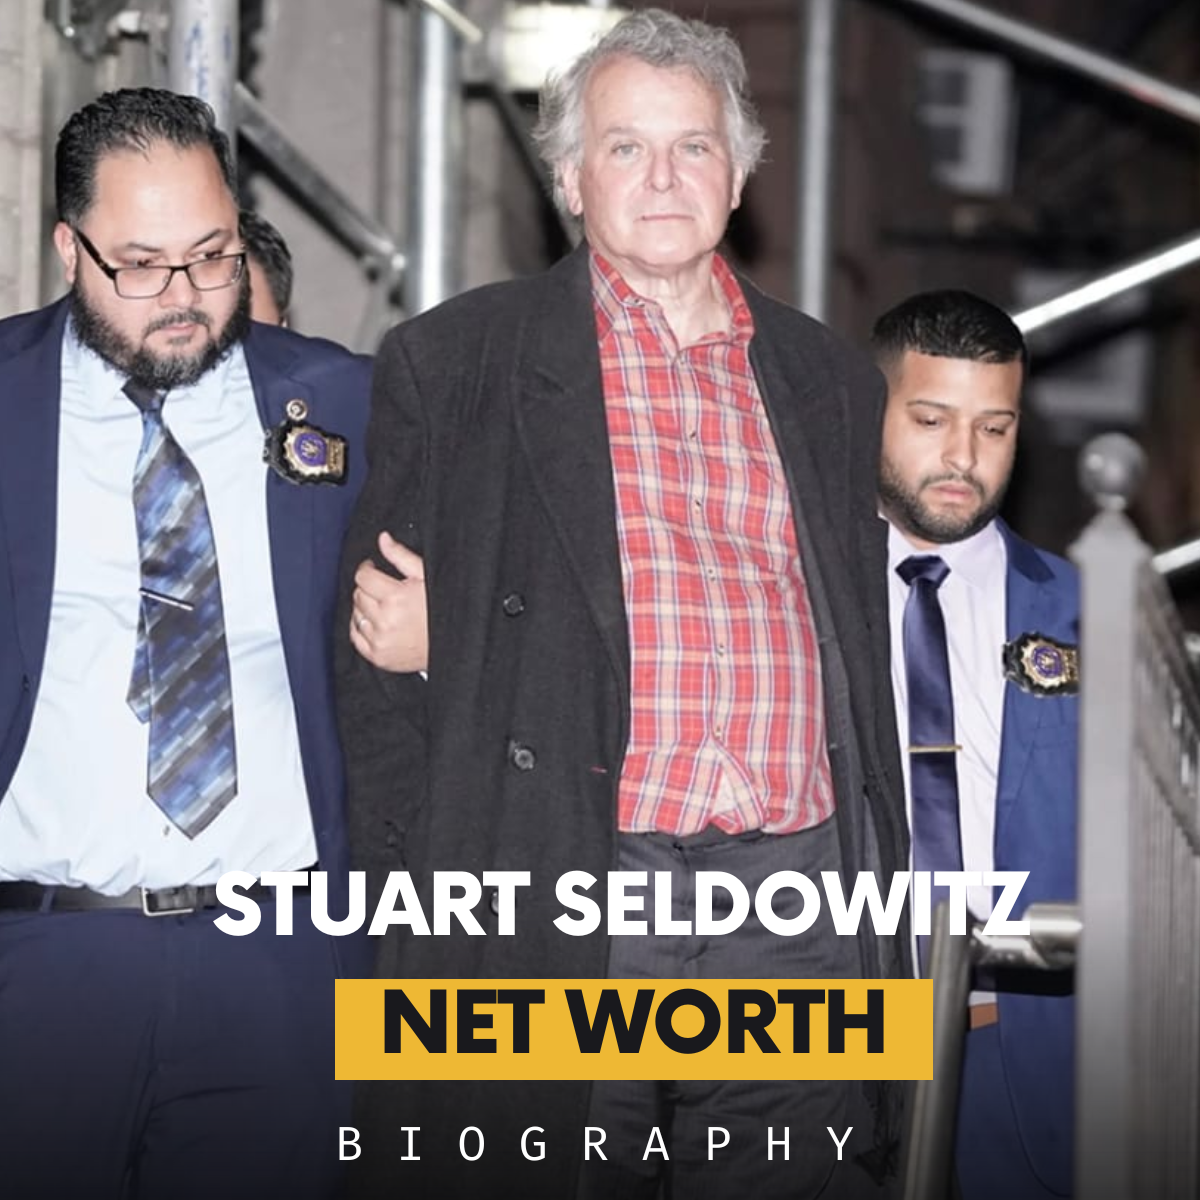 Stuart Seldowitz net worth